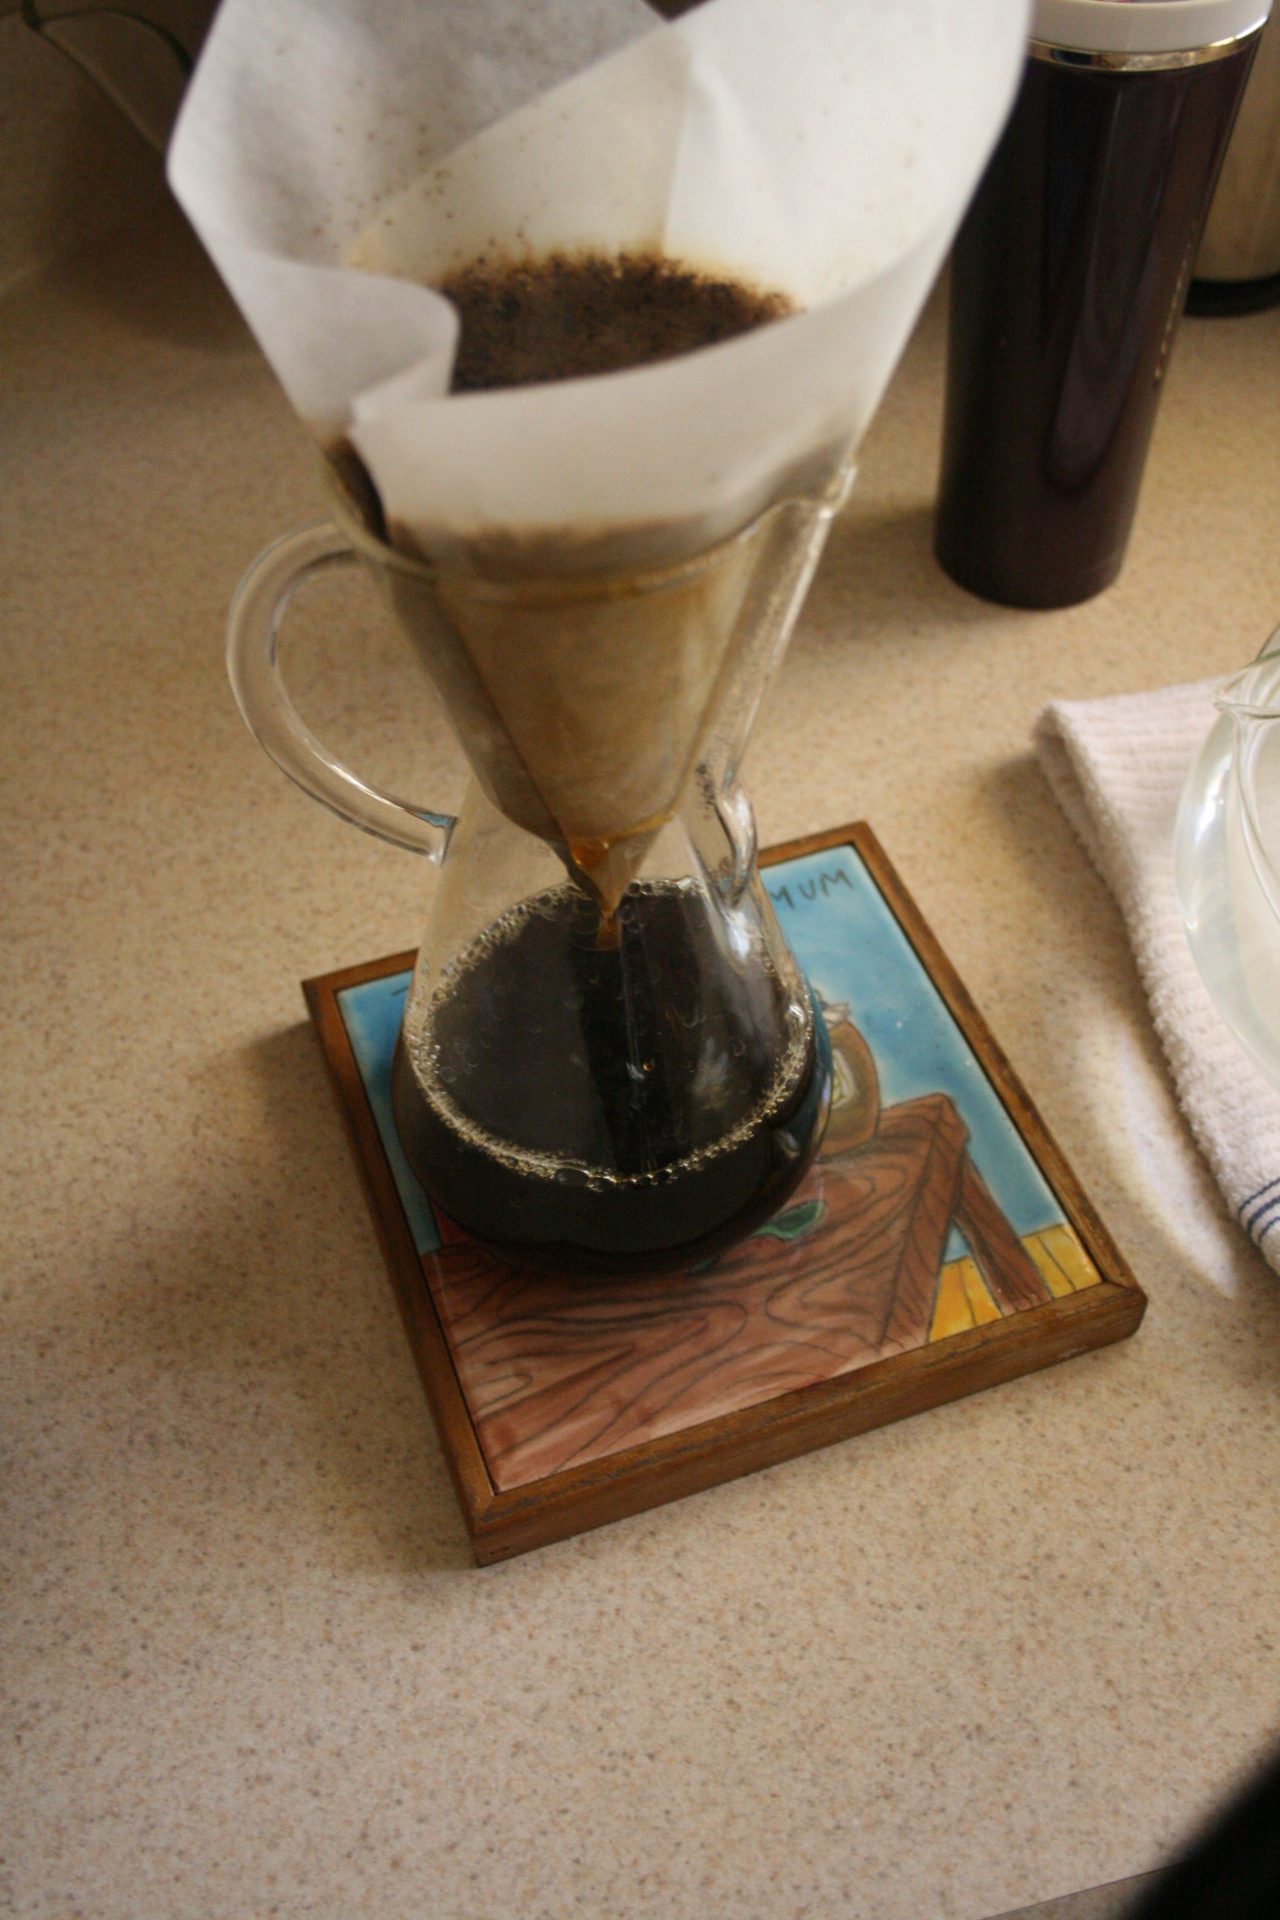 https://www.nicolevanputten.com/wp-content/uploads/2013/11/making-coffee.jpg